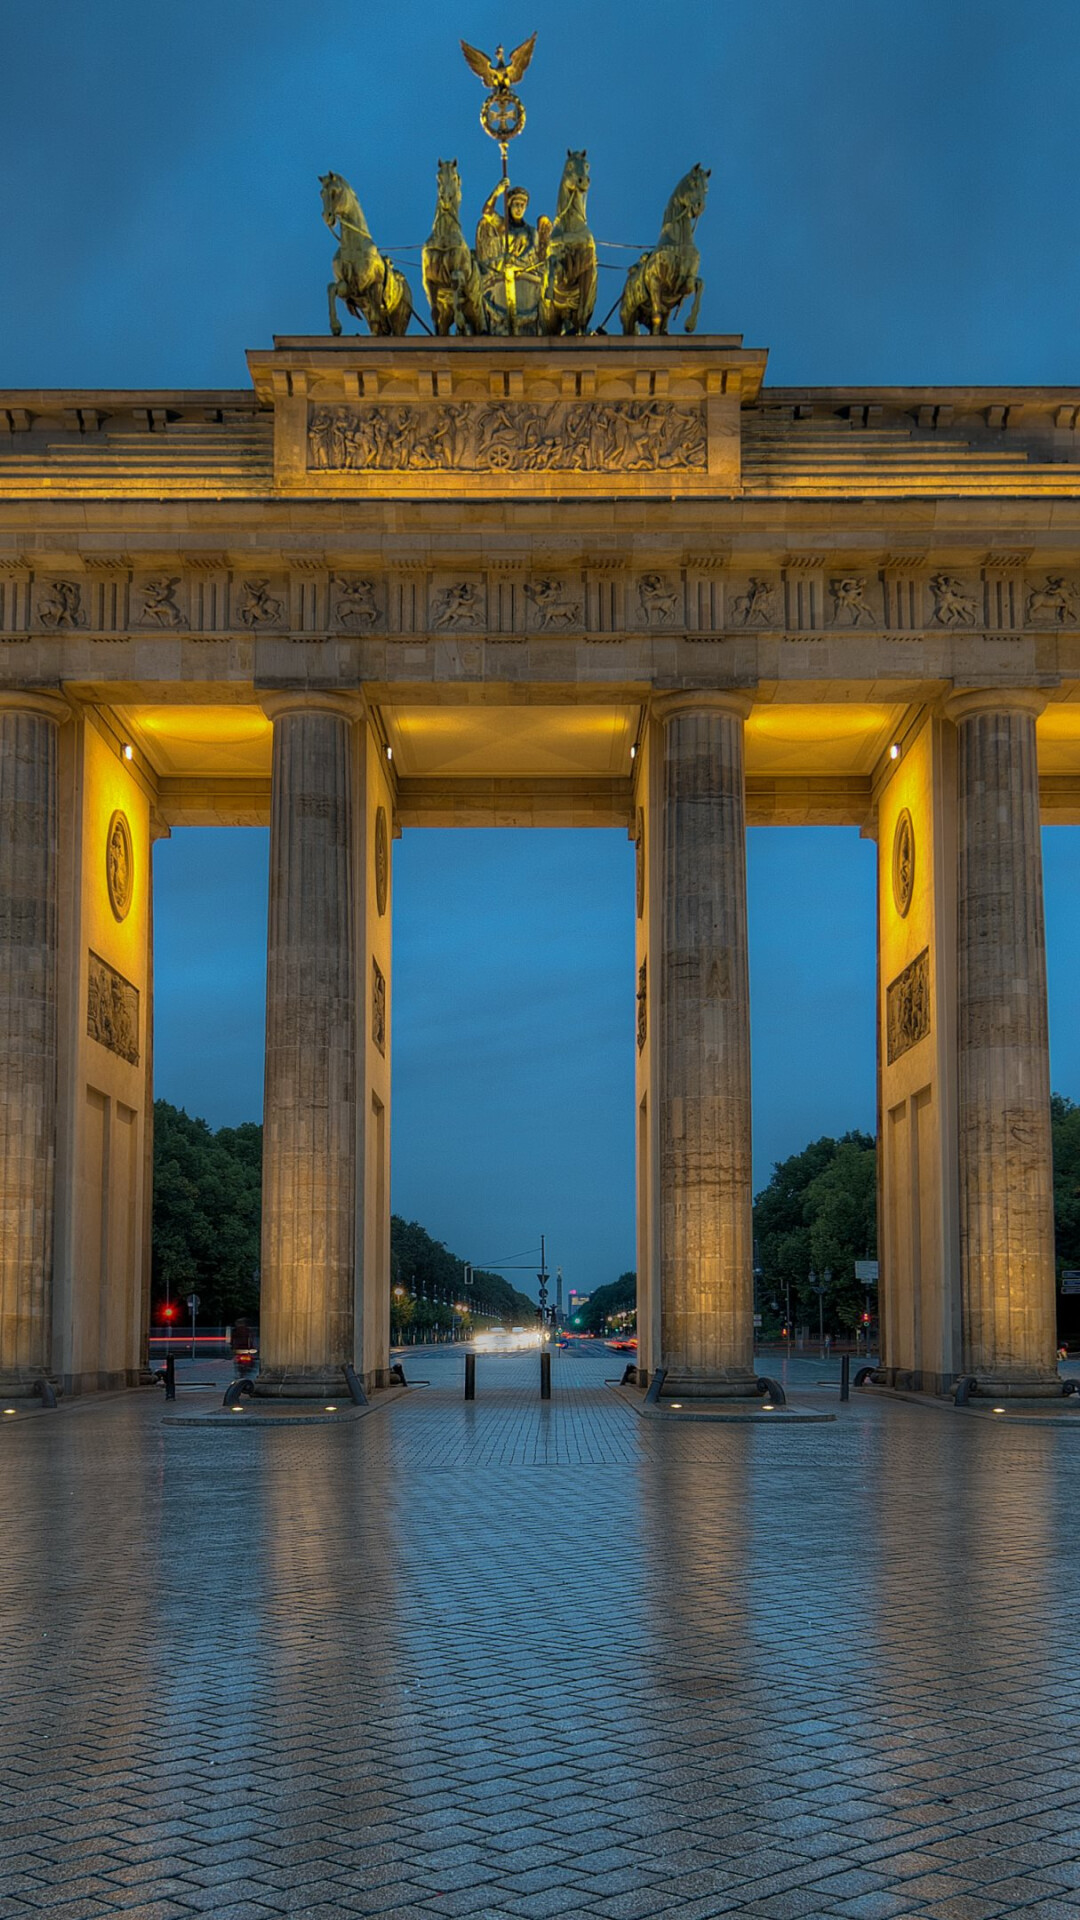 Germany: Brandenburg Gate, The Federal Republic was established in 1949, following the World Wars. 1080x1920 Full HD Wallpaper.